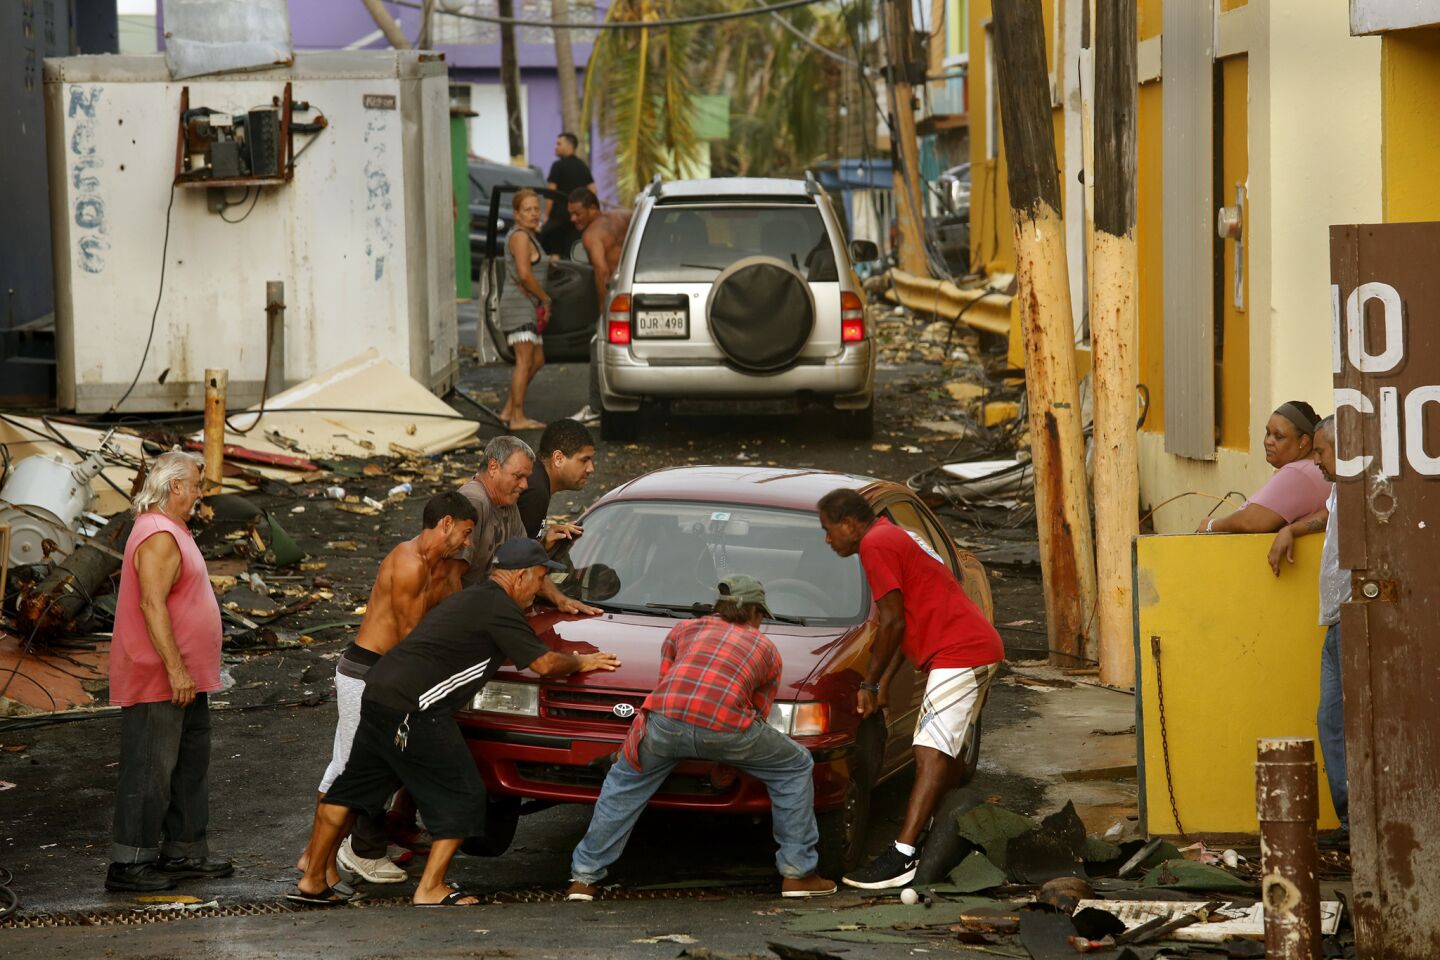 Neighbors come together to move a car in San Juan's La Perla area.